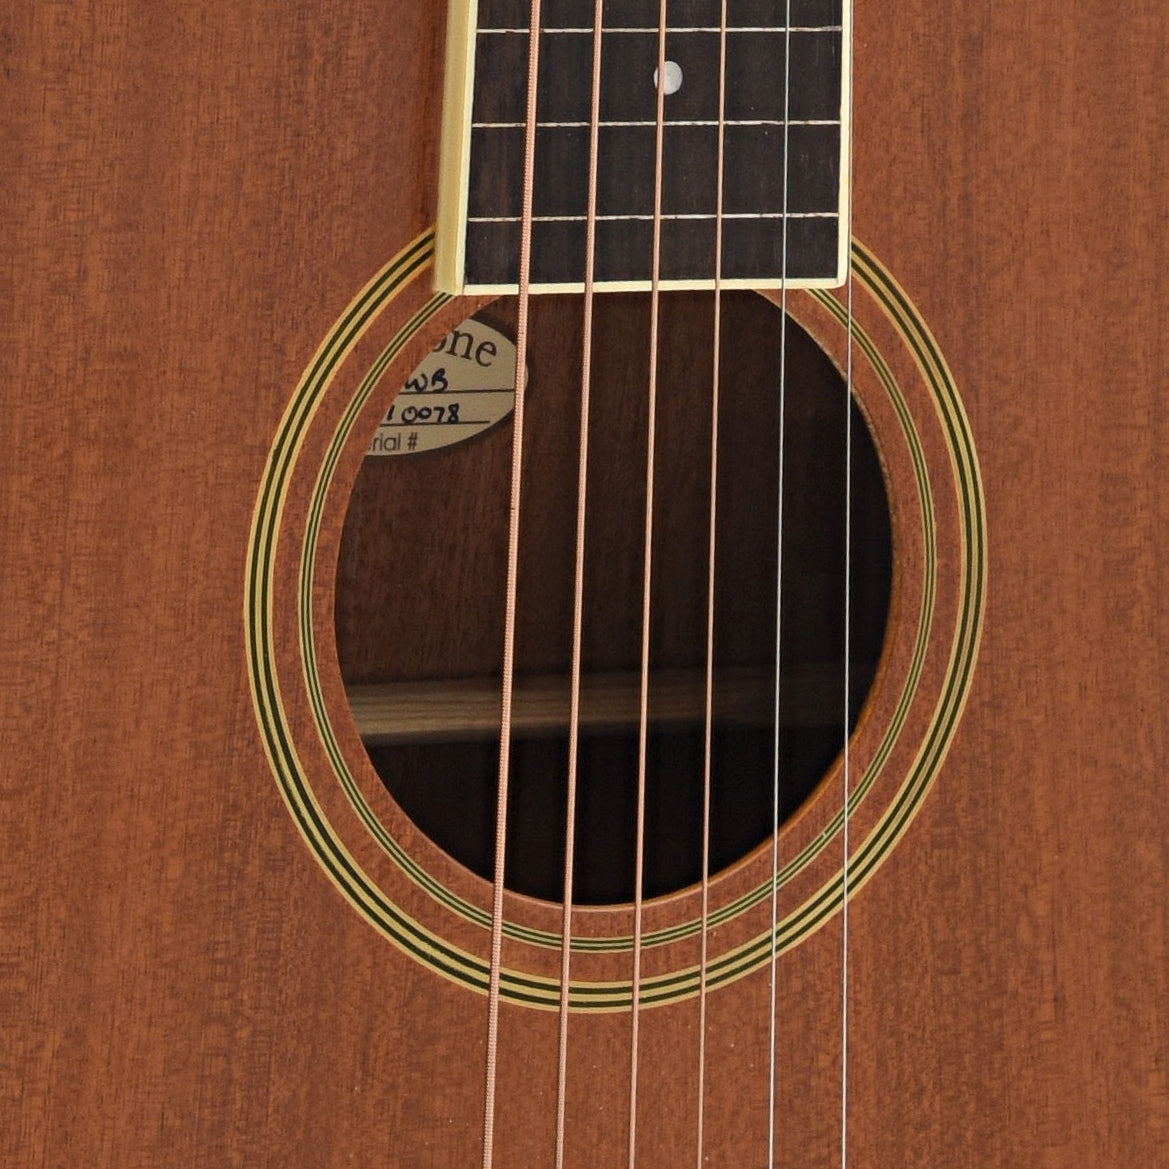 Soundhole of Gold Tone GT Weissenborn Guitar 